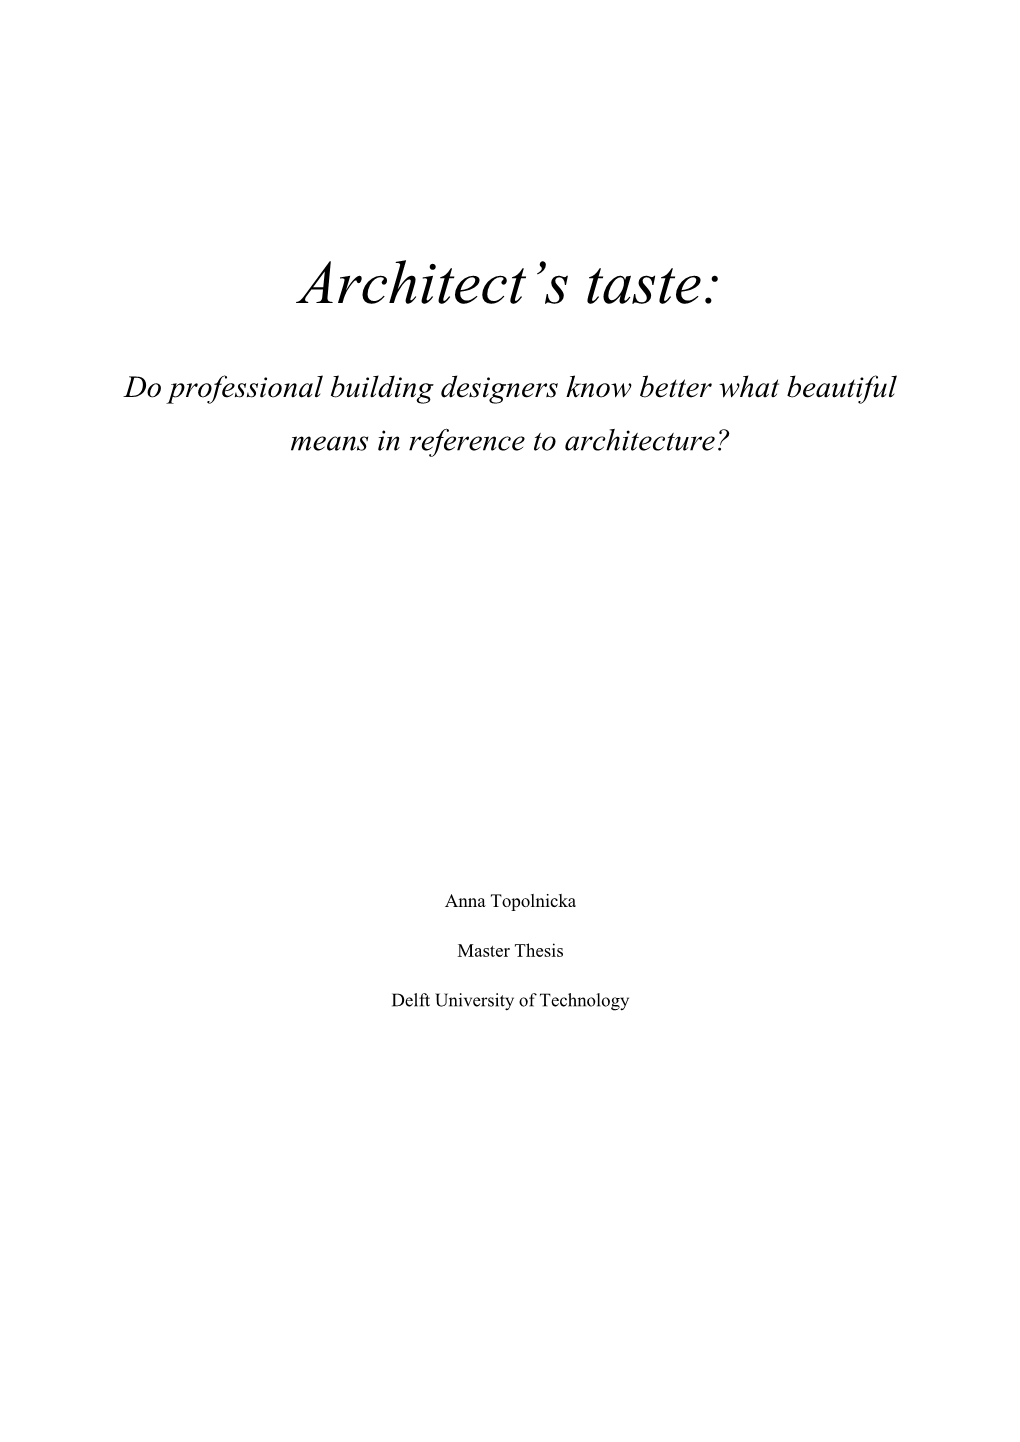 Architect's Taste